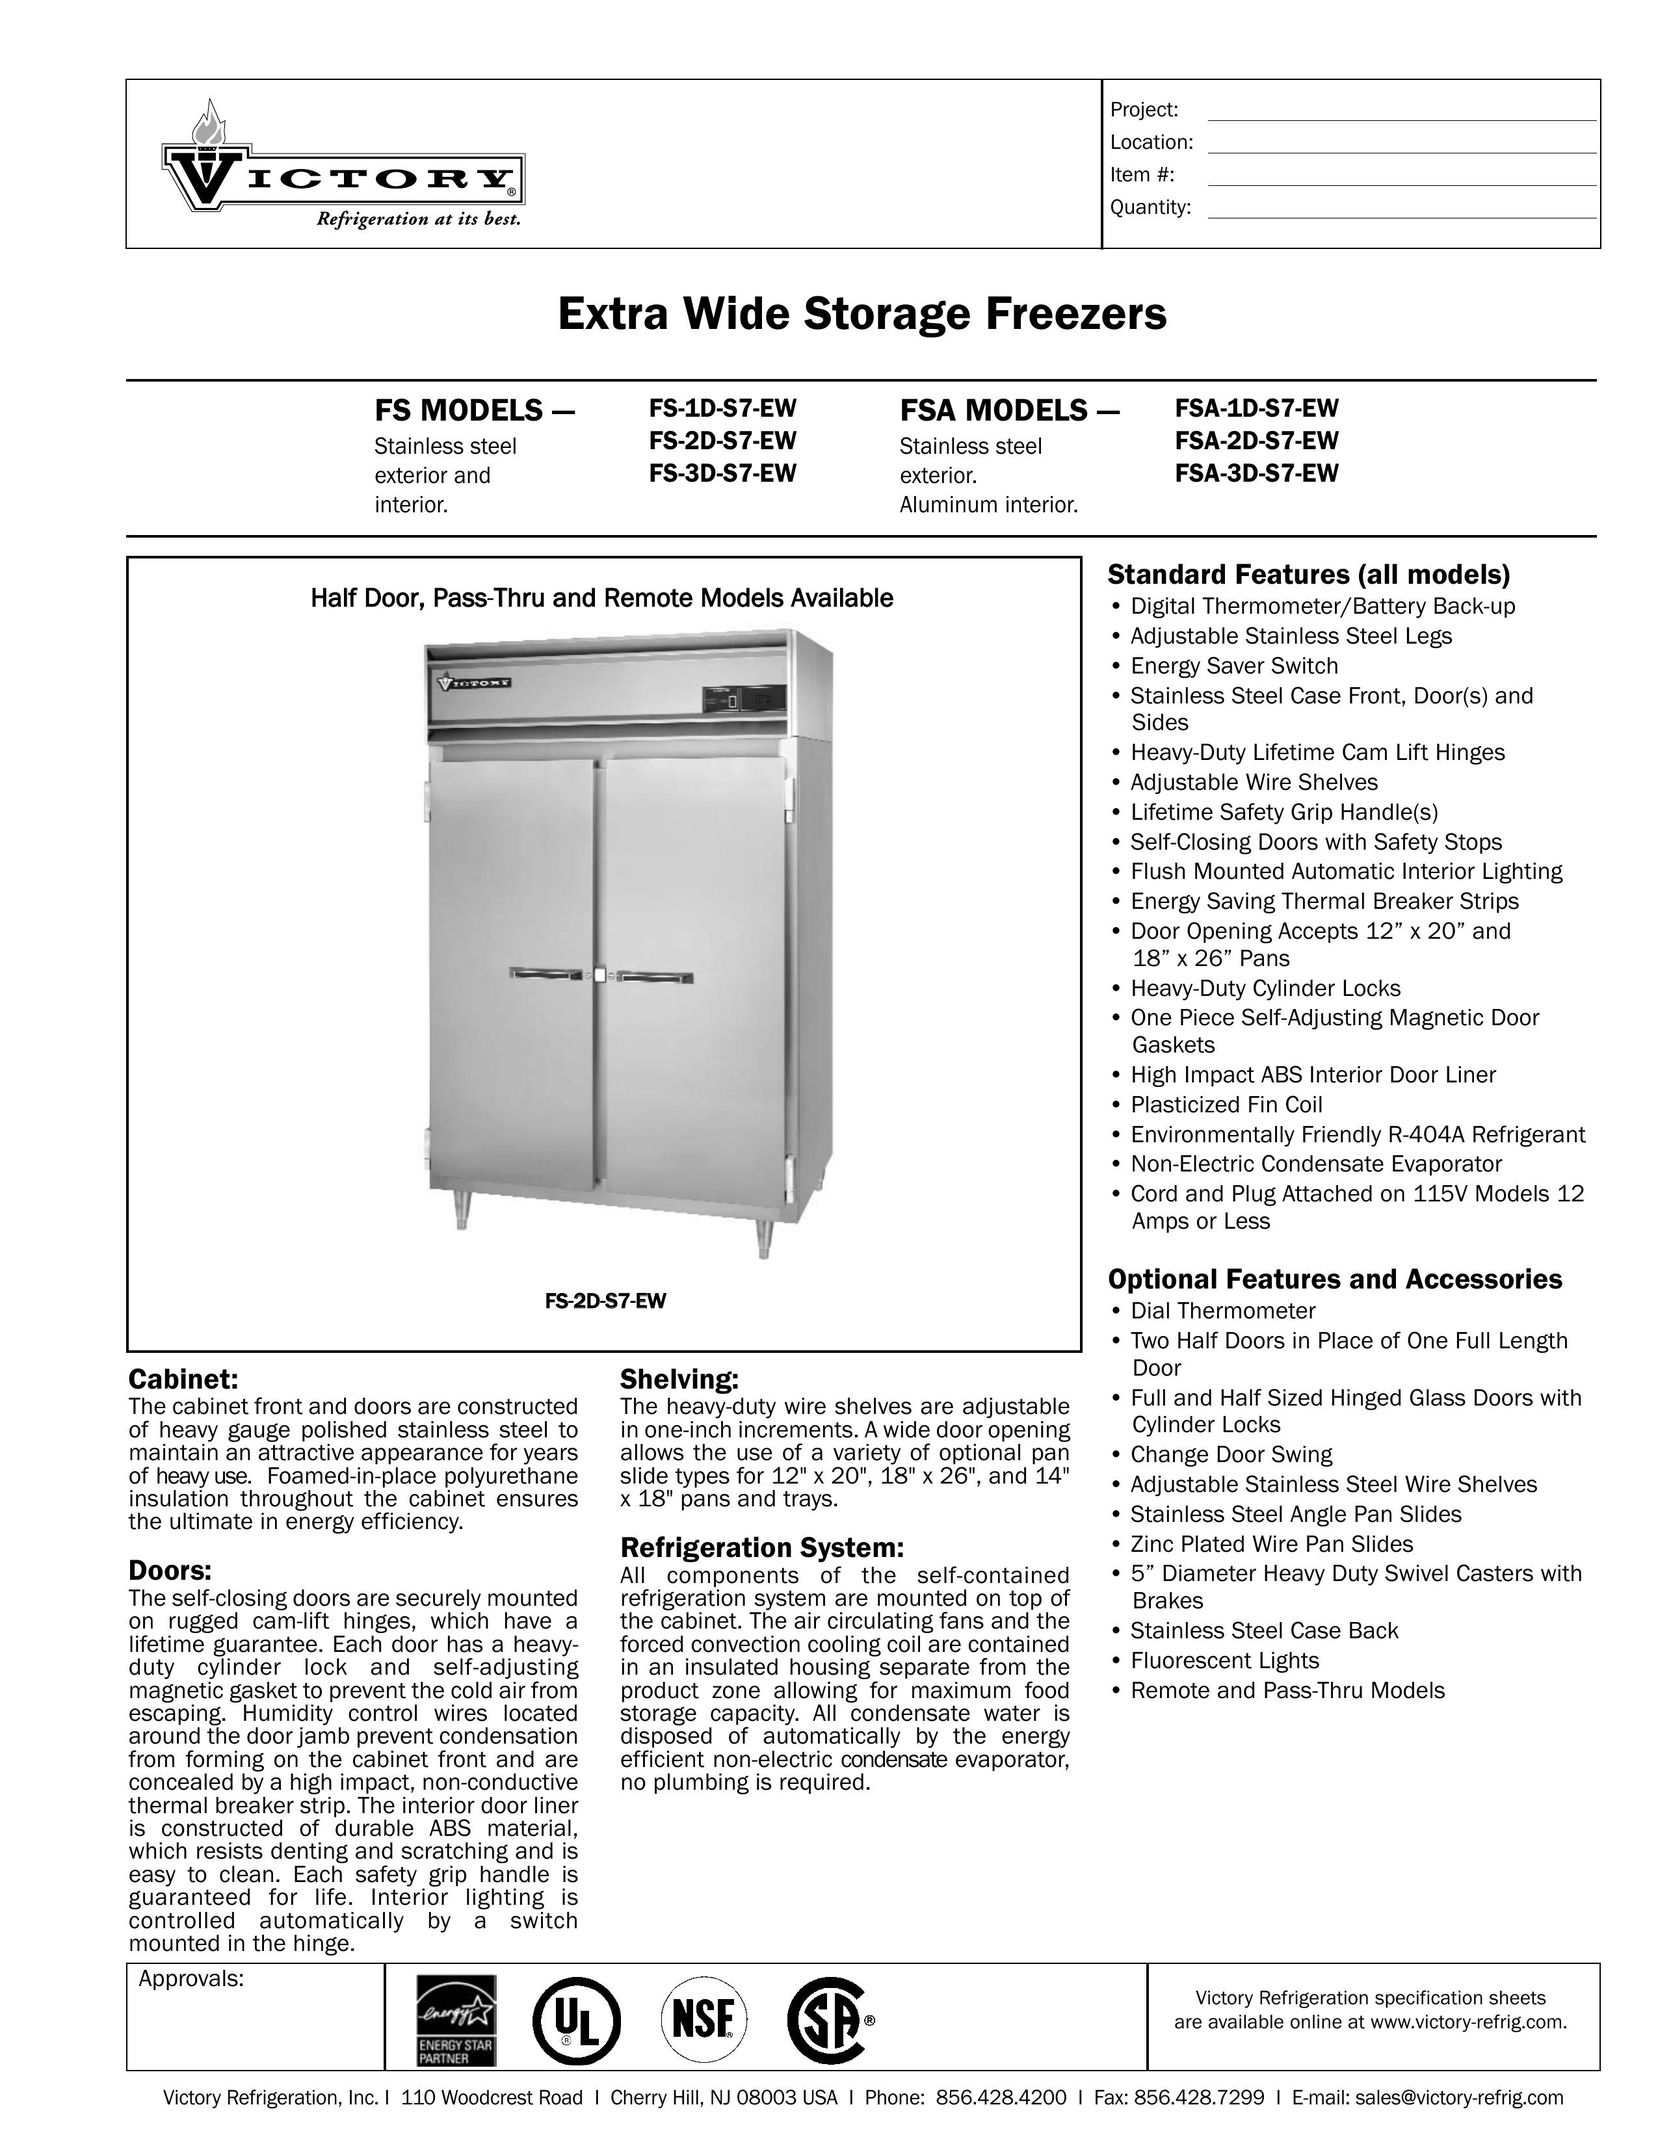 Victory Refrigeration FSA-2D-S7-EW Freezer User Manual